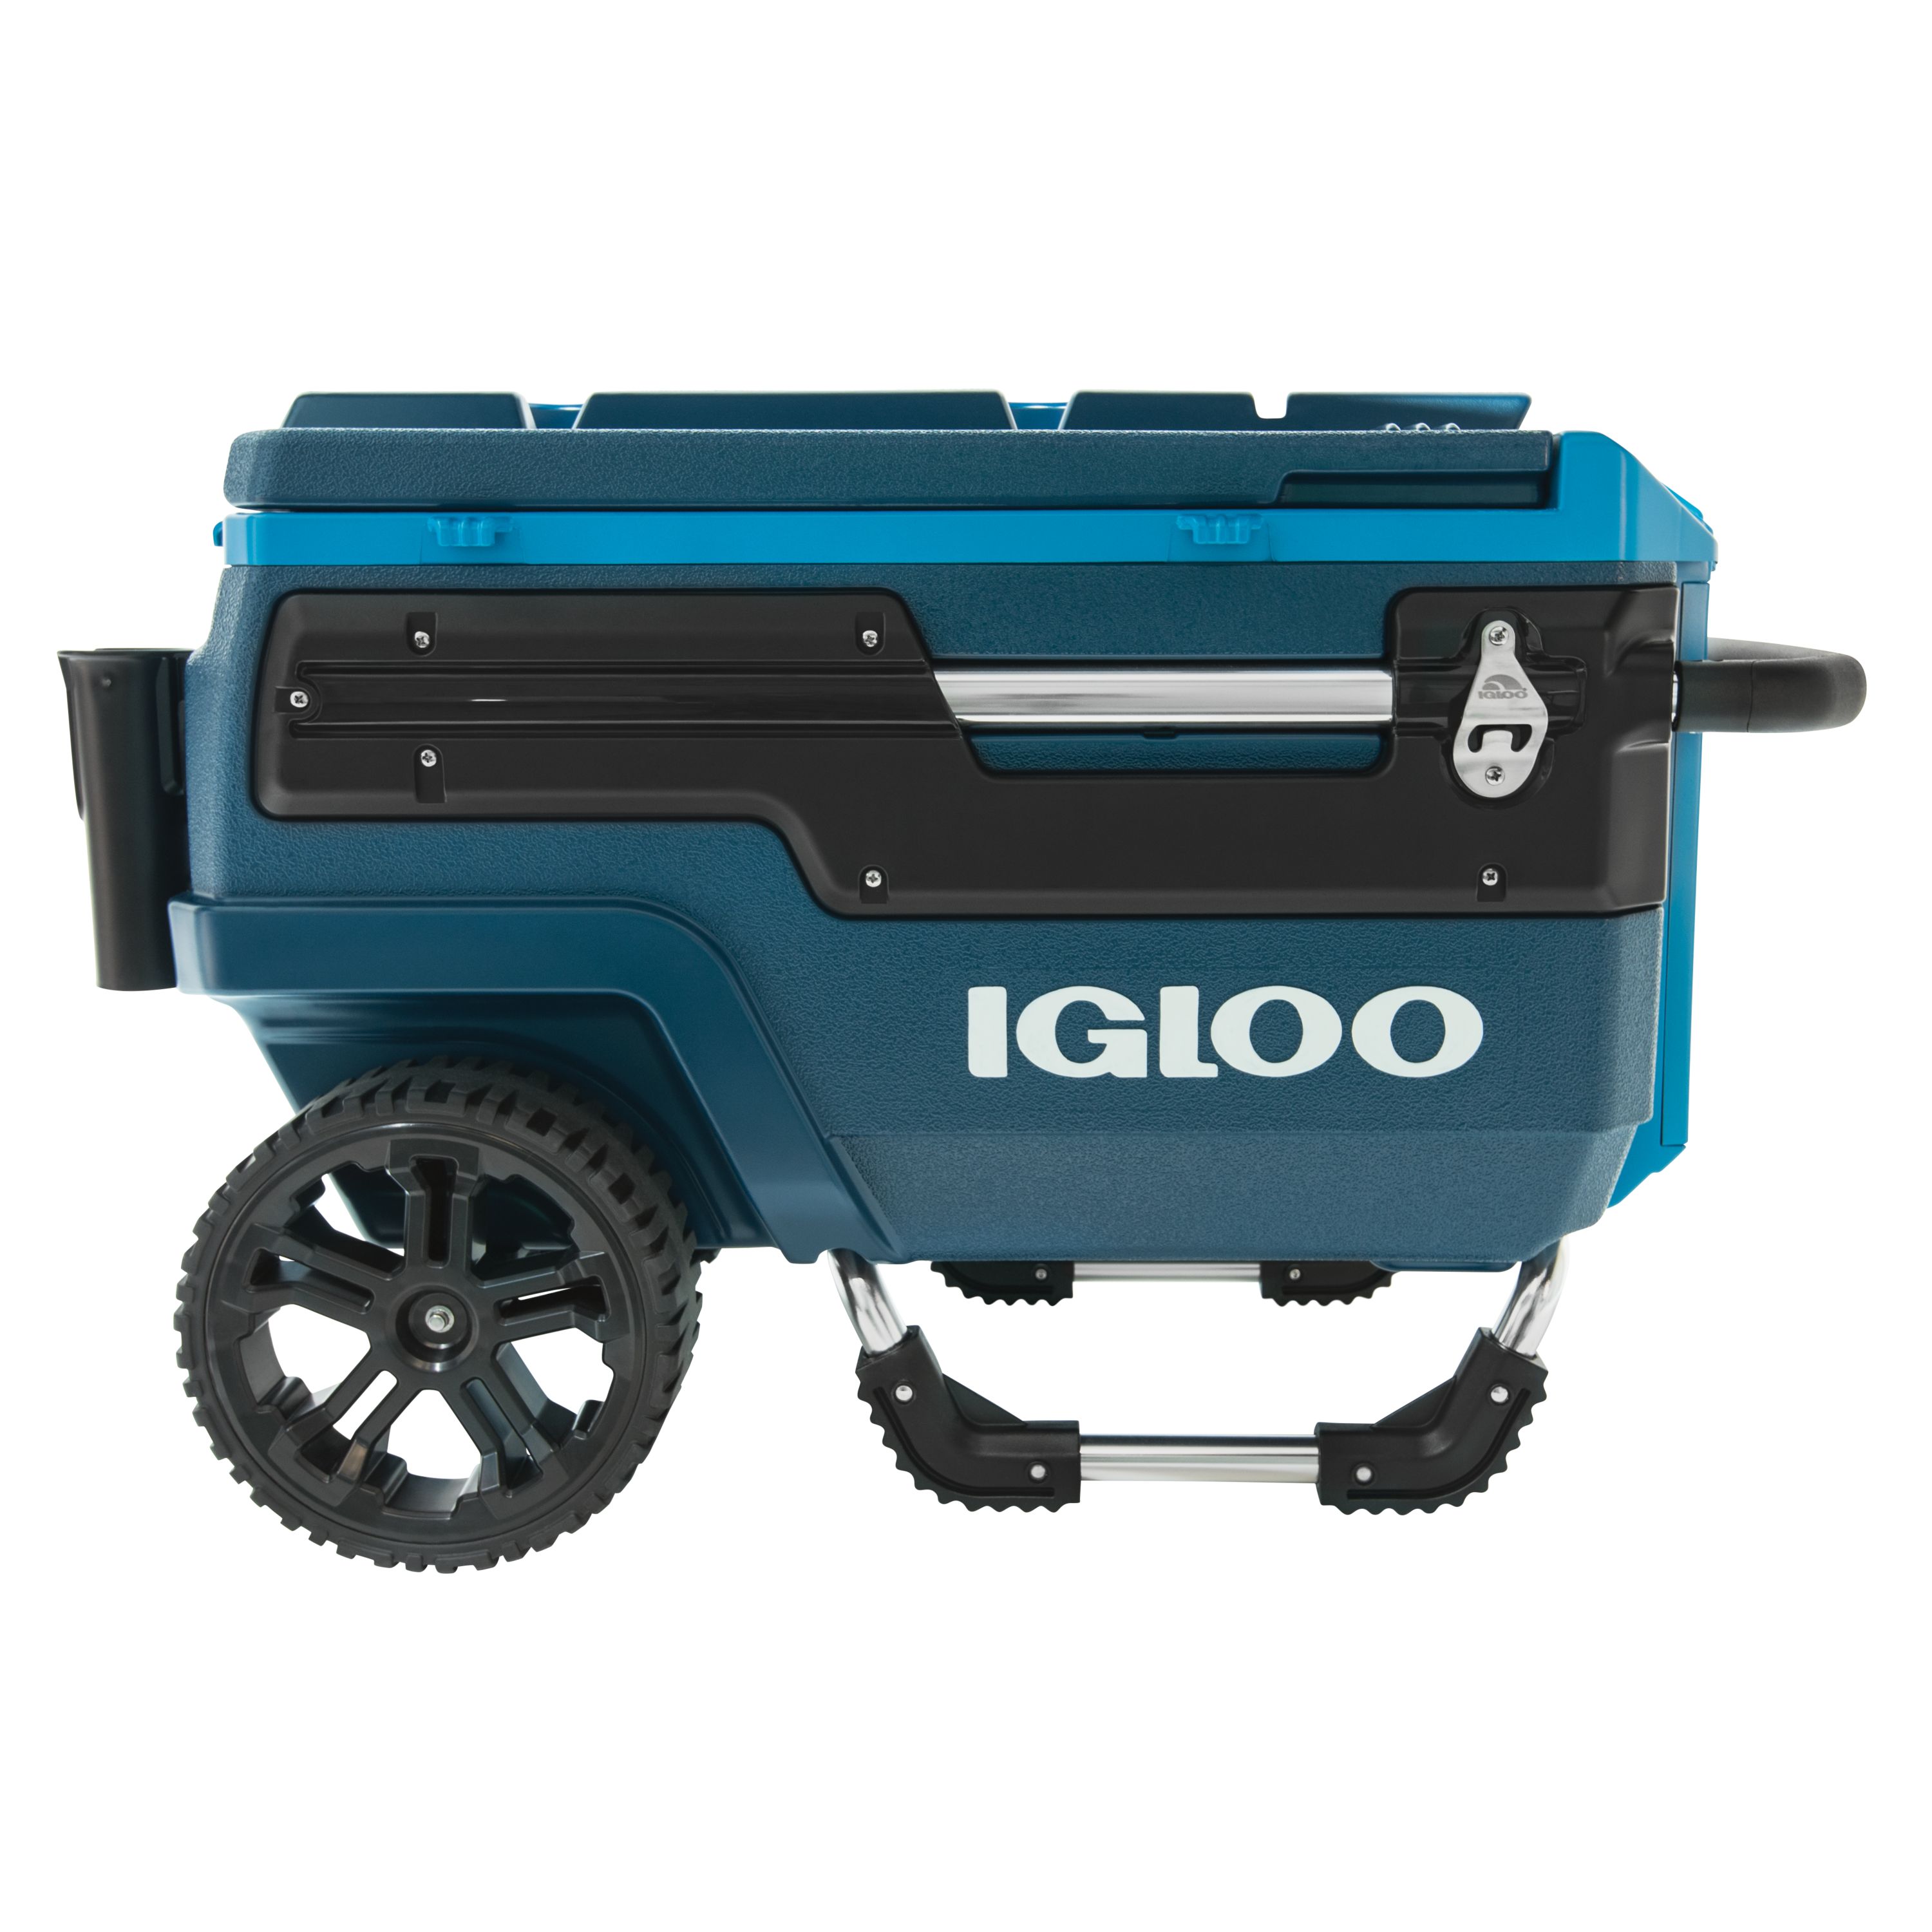 Igloo 70-Quart Trailmate Journey Cooler Ice Chest - Blue - image 1 of 12